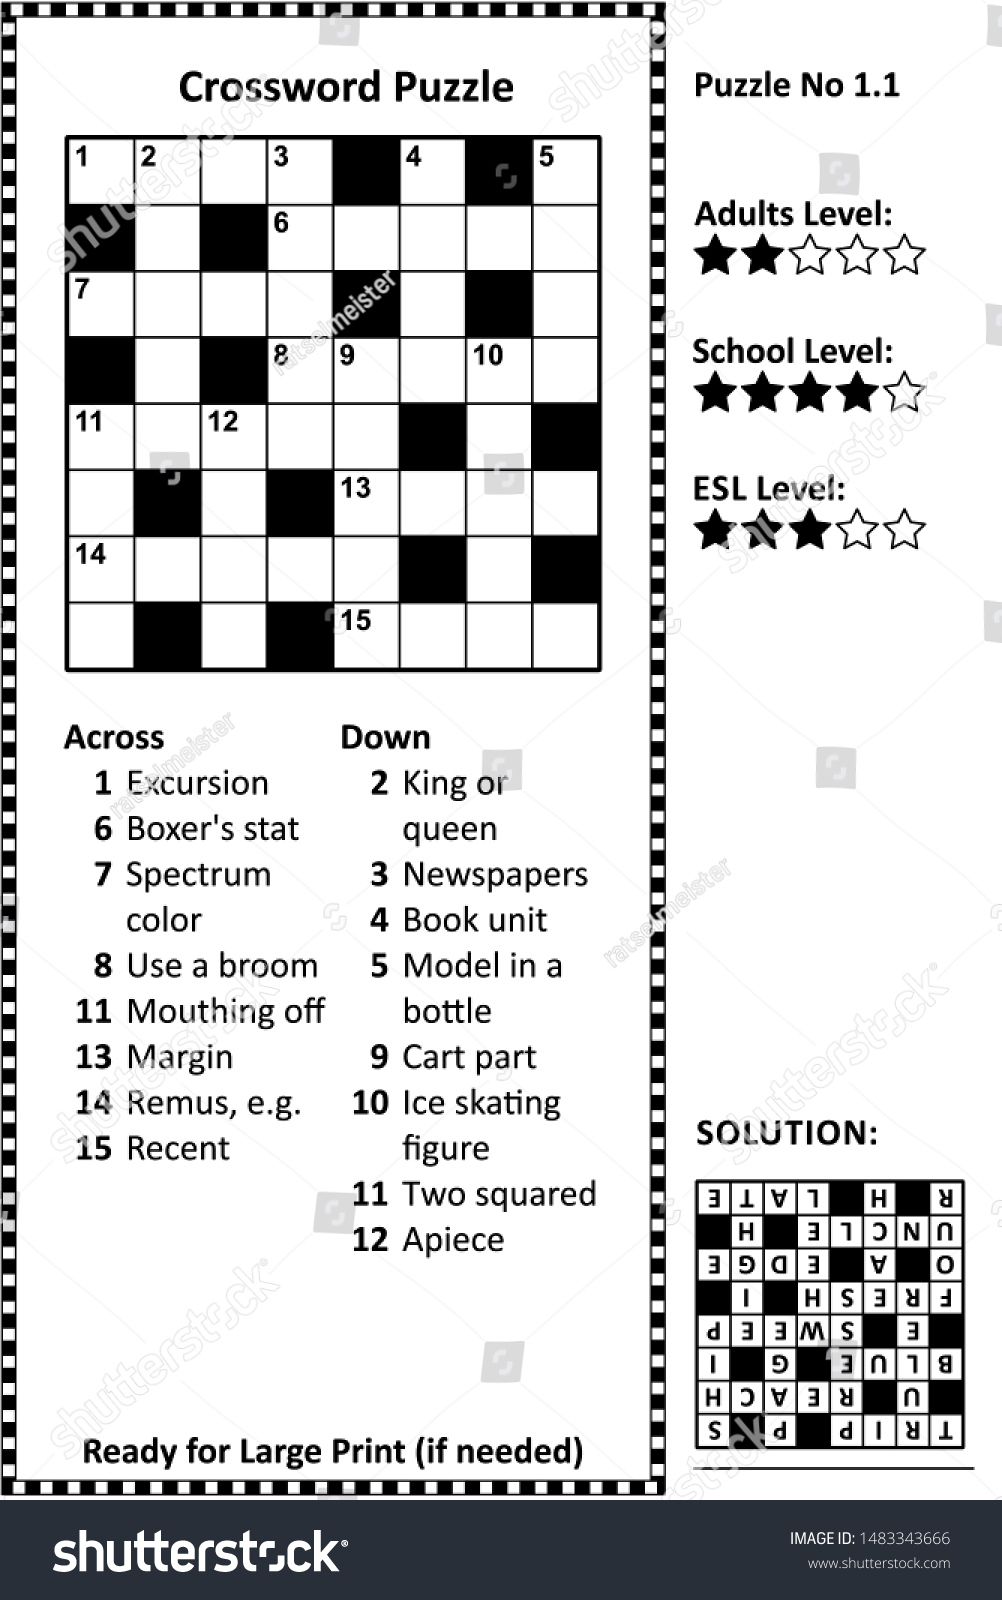 tour of duty crossword puzzle clue